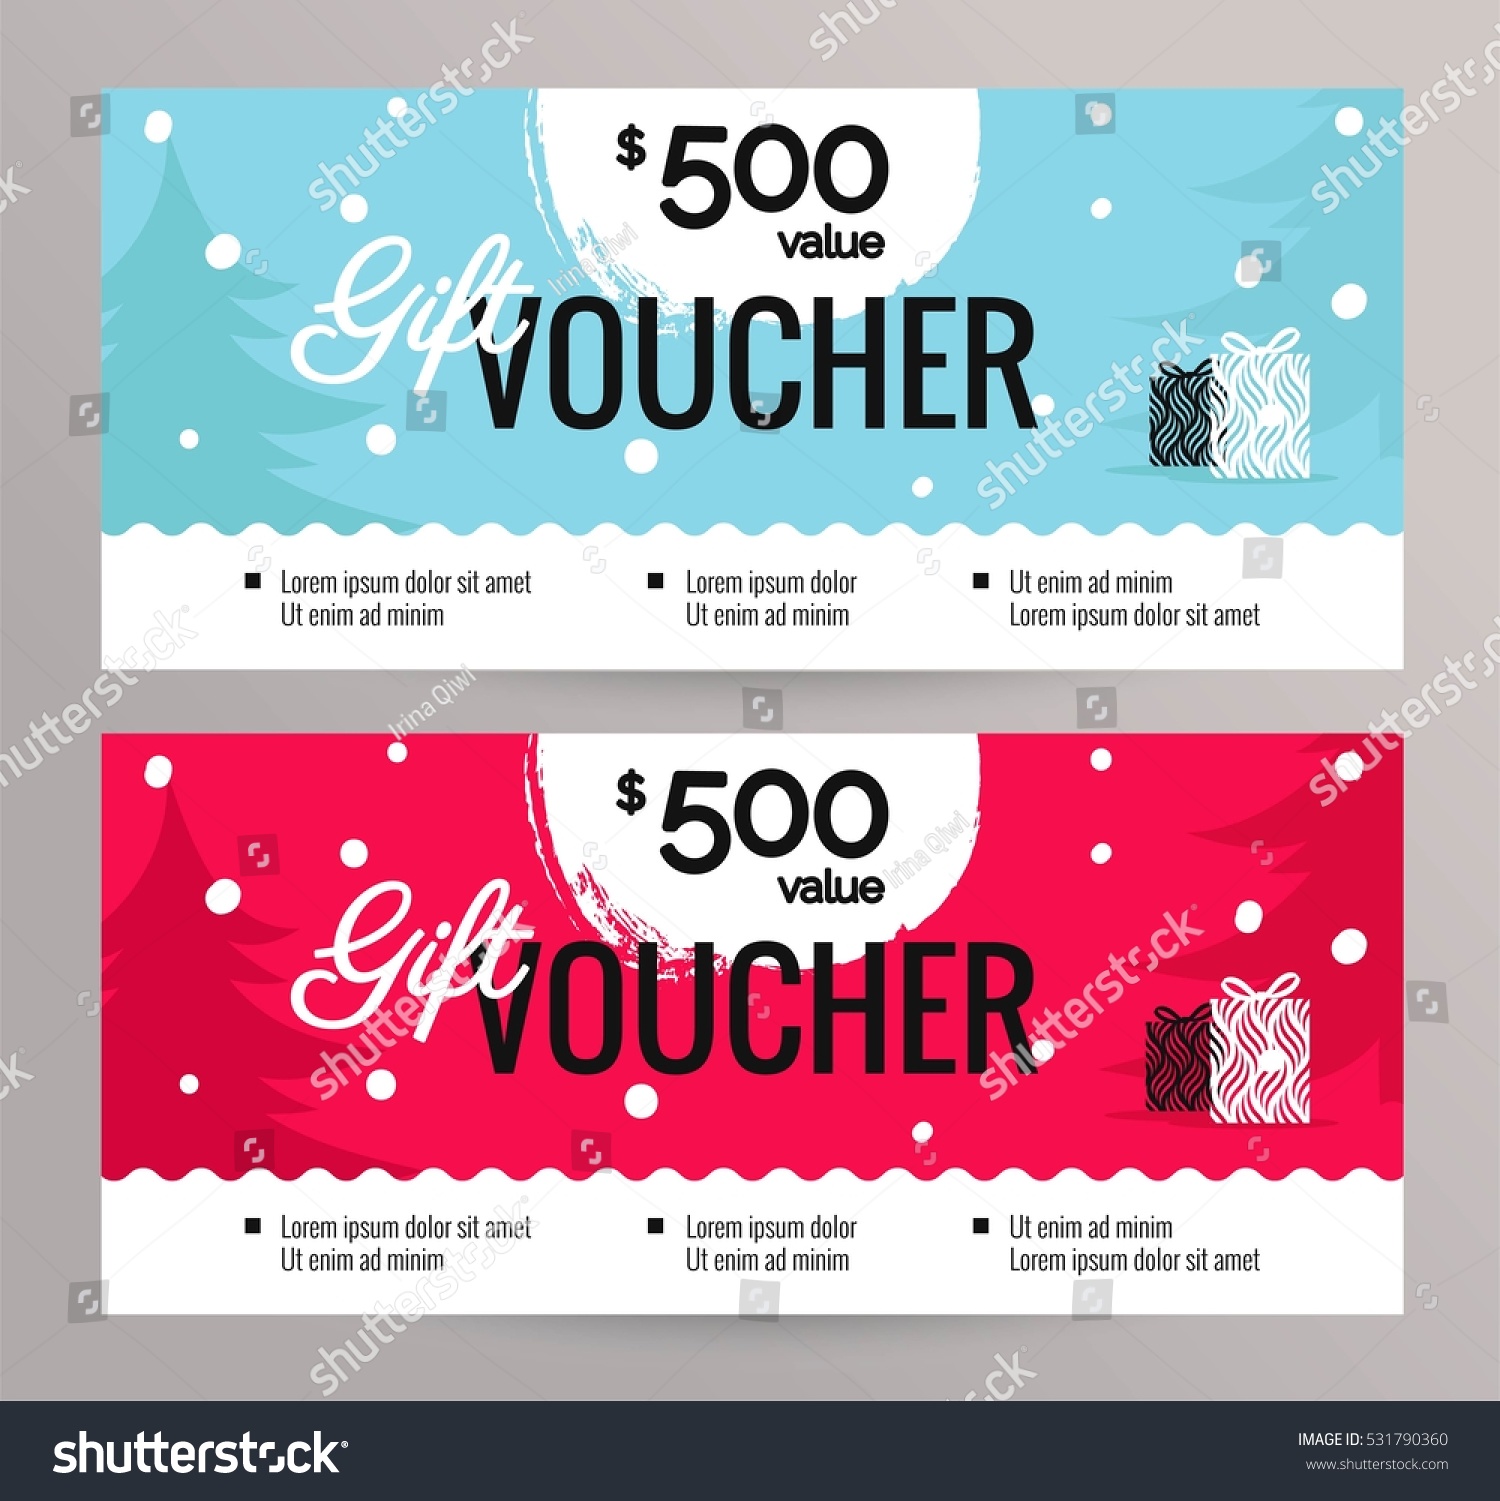 GUTSCHEIN 100 Eur Merchandise Voucher COUPON VOUCHER Christmas Gift Voucher Gift Gift 1 year valid /& transferable GoFuture